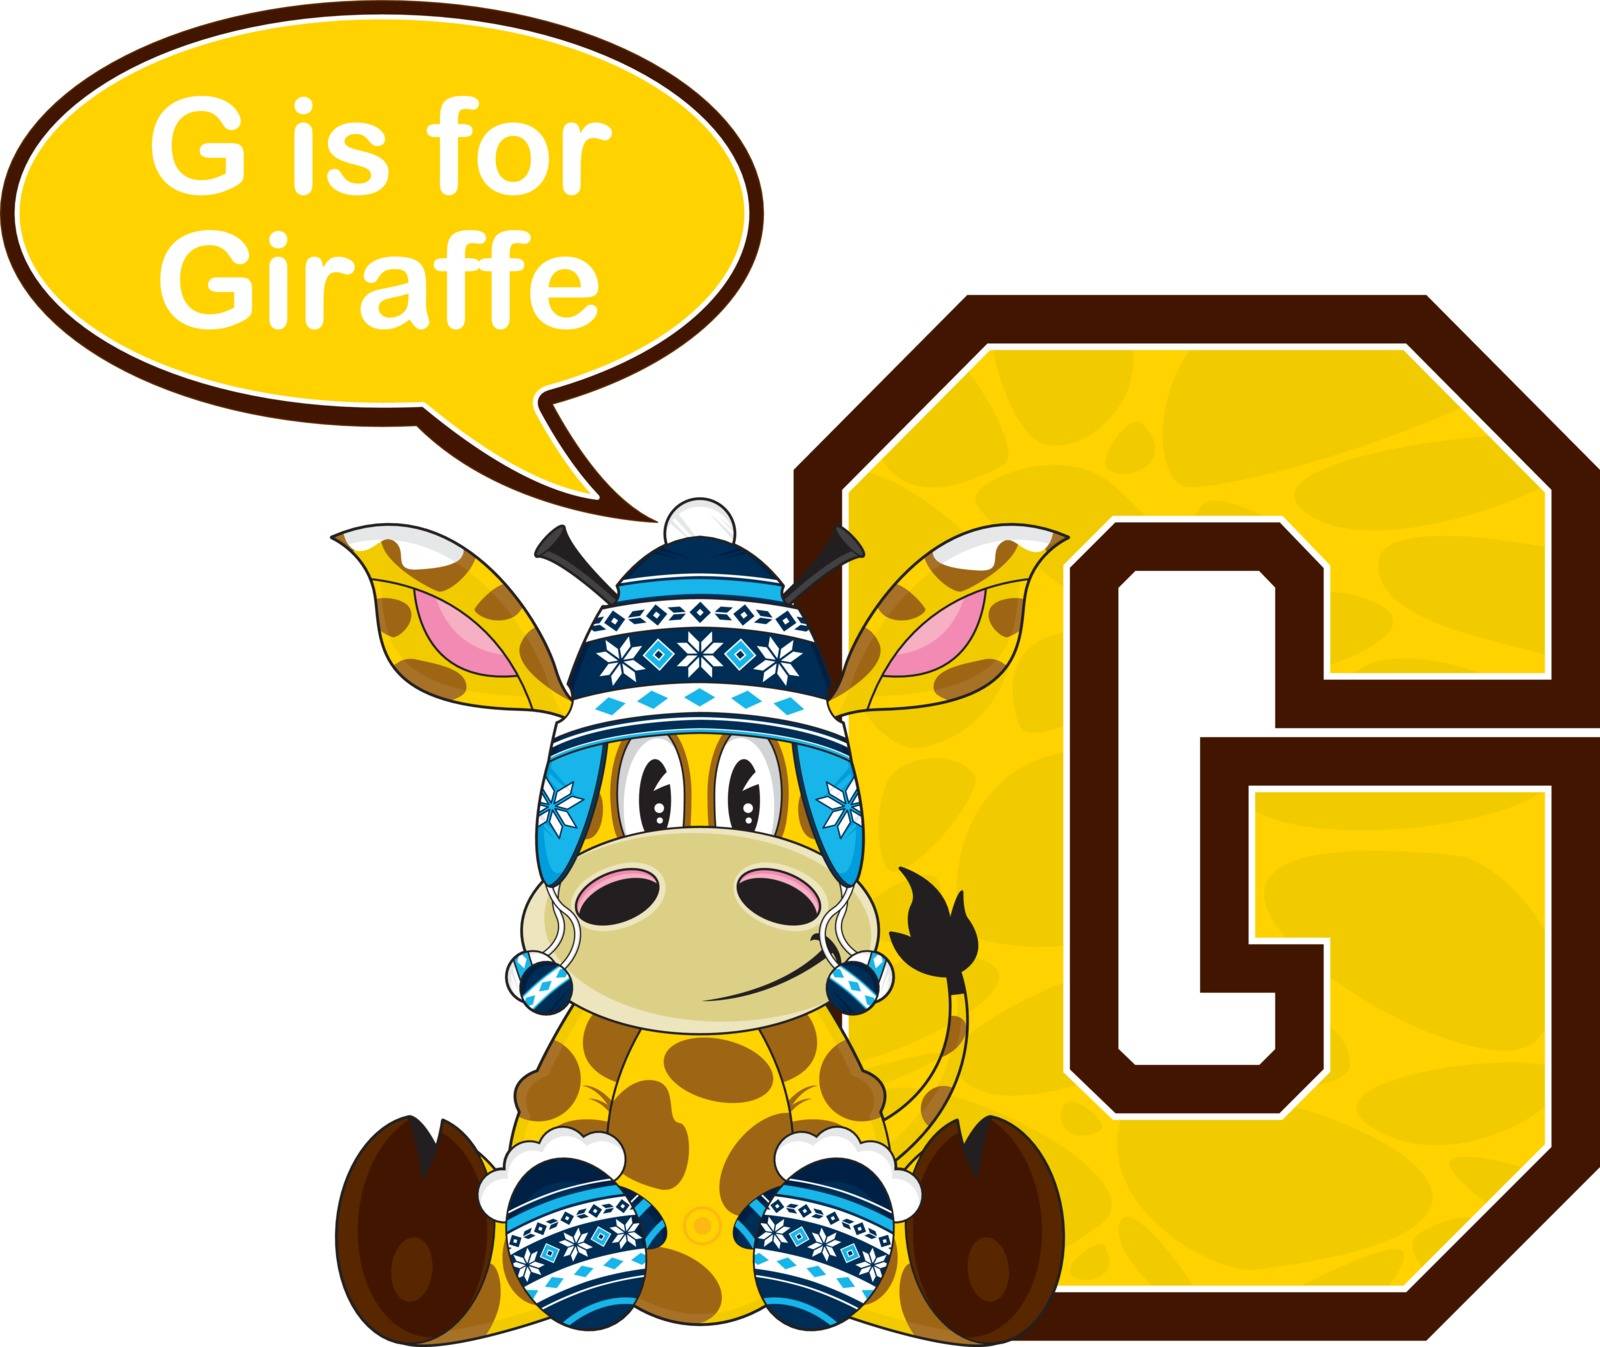 G is for Giraffe by markmurphycreative